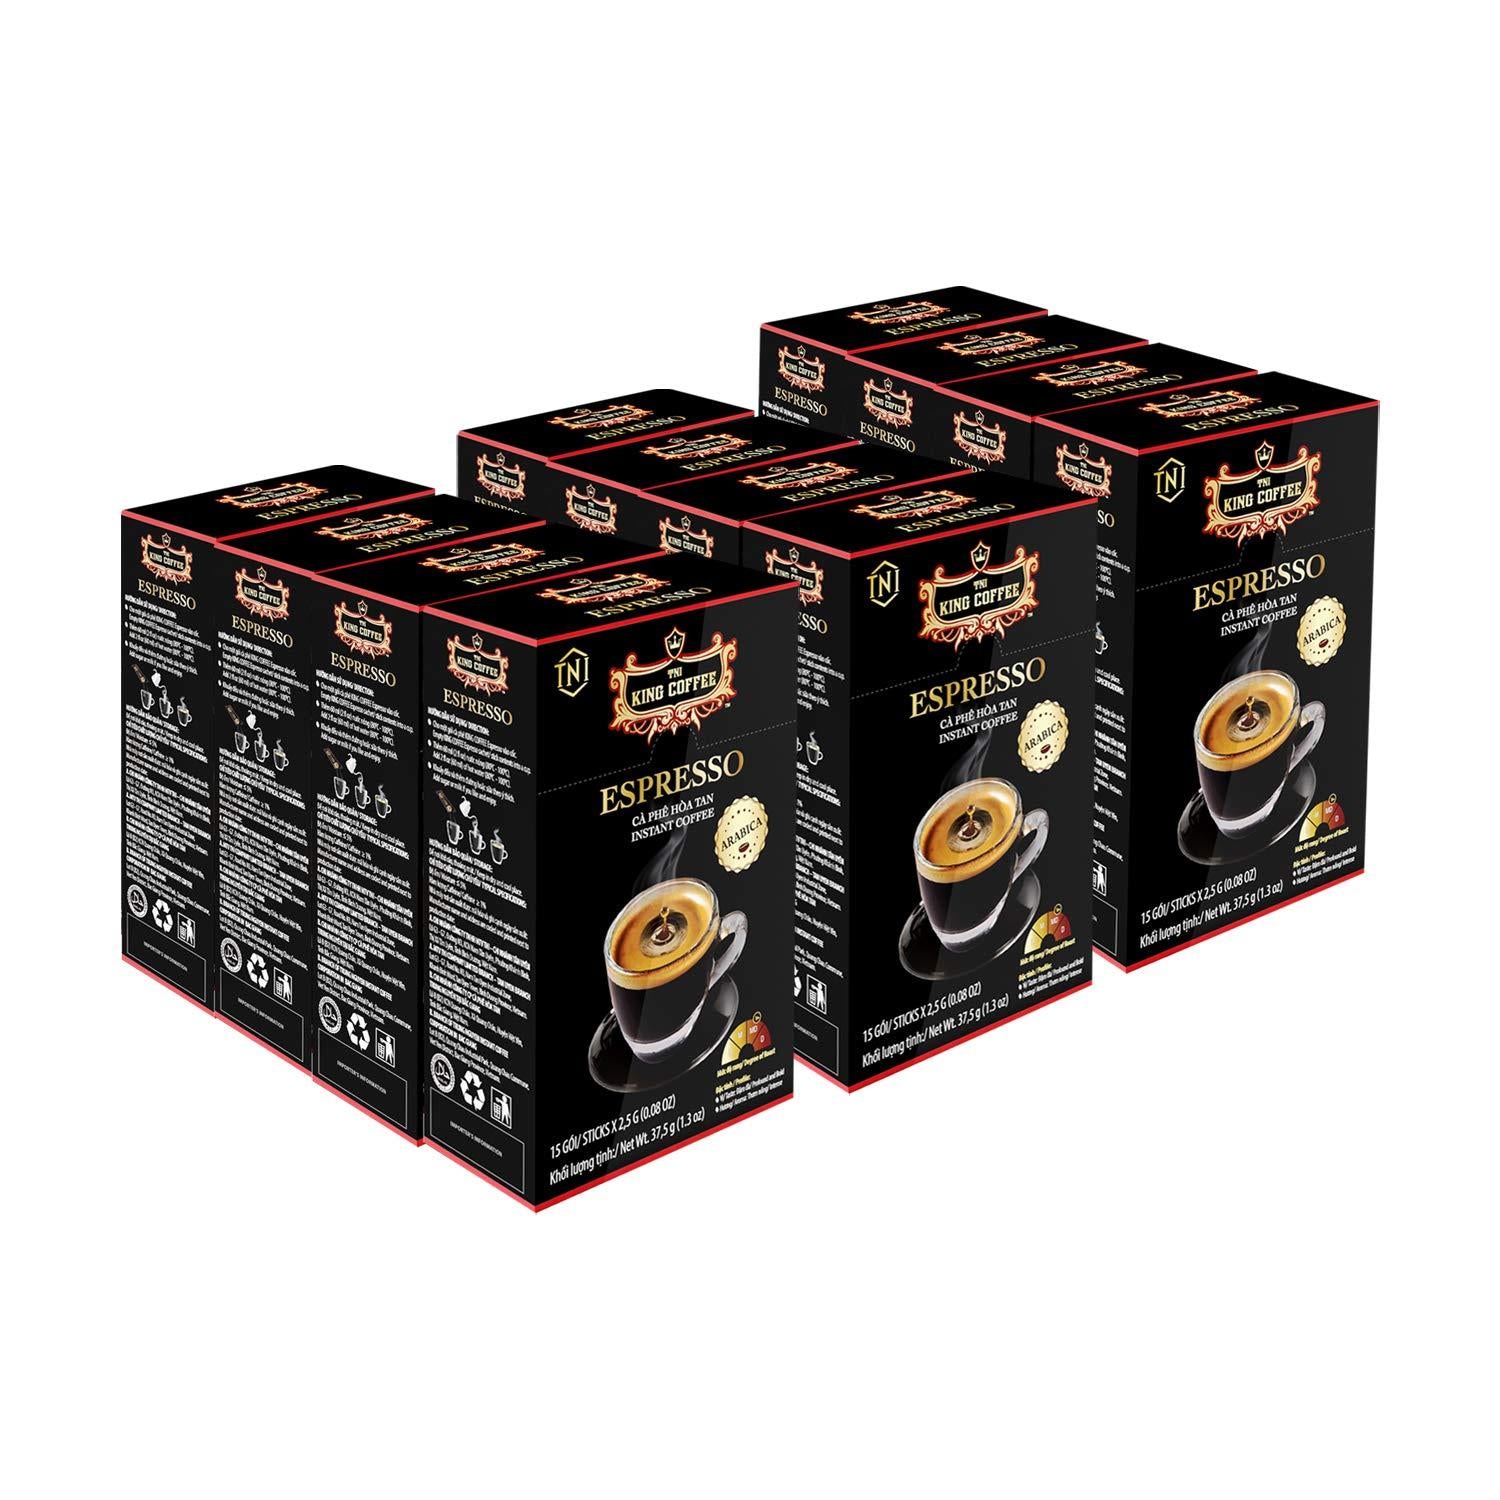 TNI King Coffee Espresso Instant Coffee Vietnamese Coffee Arabica Instant Coffee Mix Medium Roast 15 sticks per box x 2.5g - Pack of 12